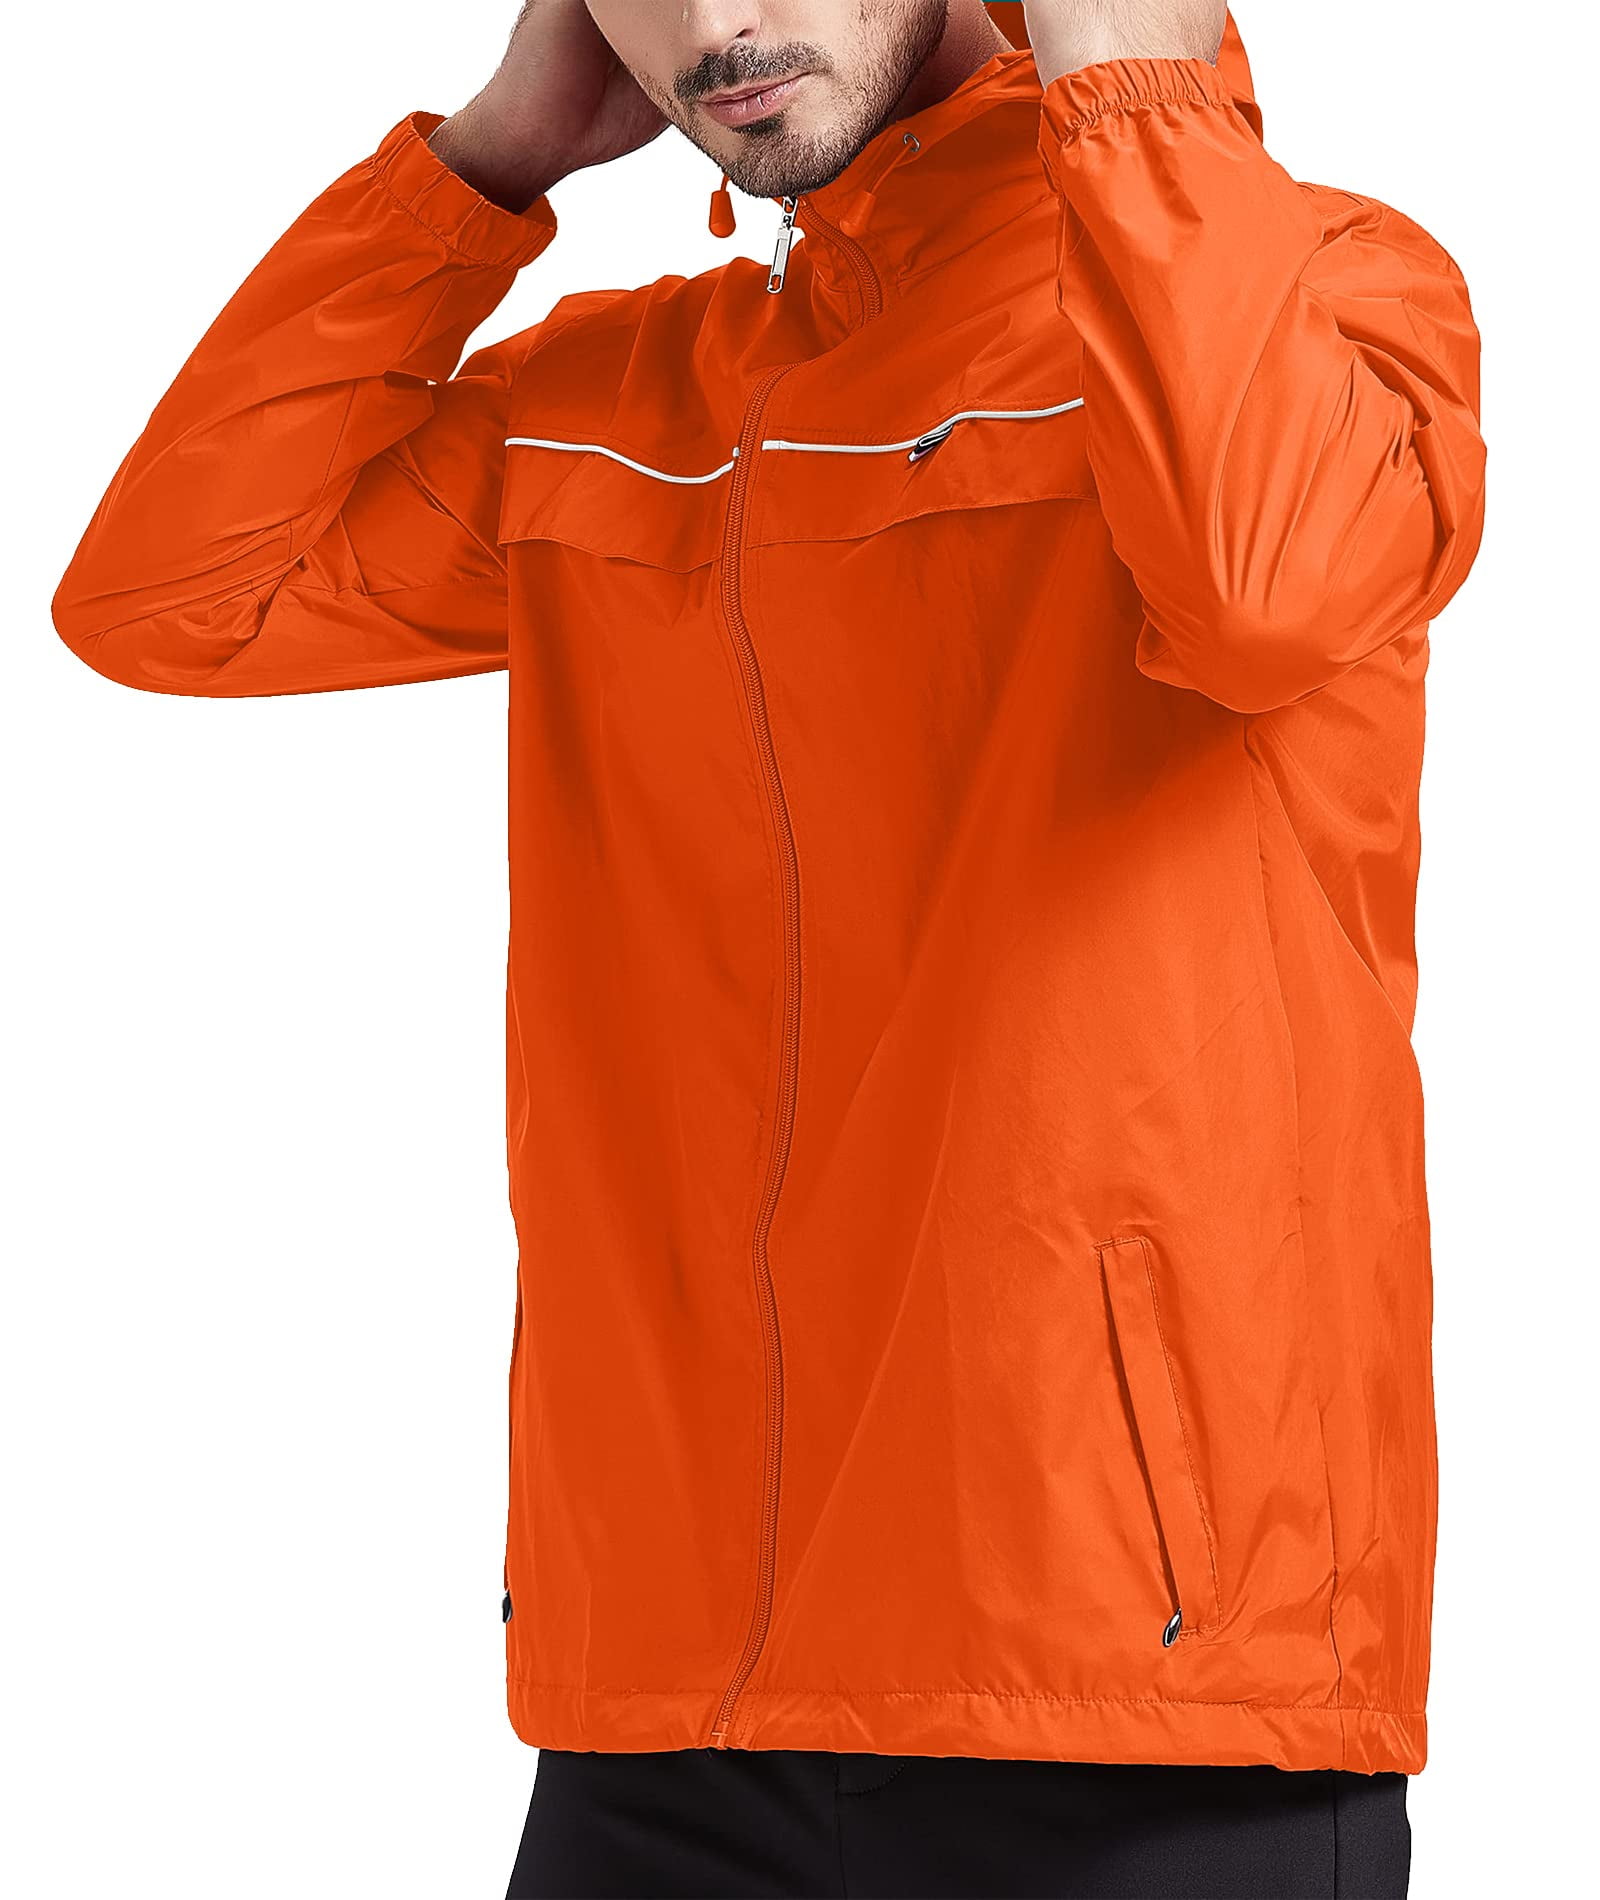 SWISSWELL Mens Rain Jackets Men Waterproof breathable Lightweight  Windbreaker with Hood Outdoor Raincoat for Hiking Running Travel Grey L 